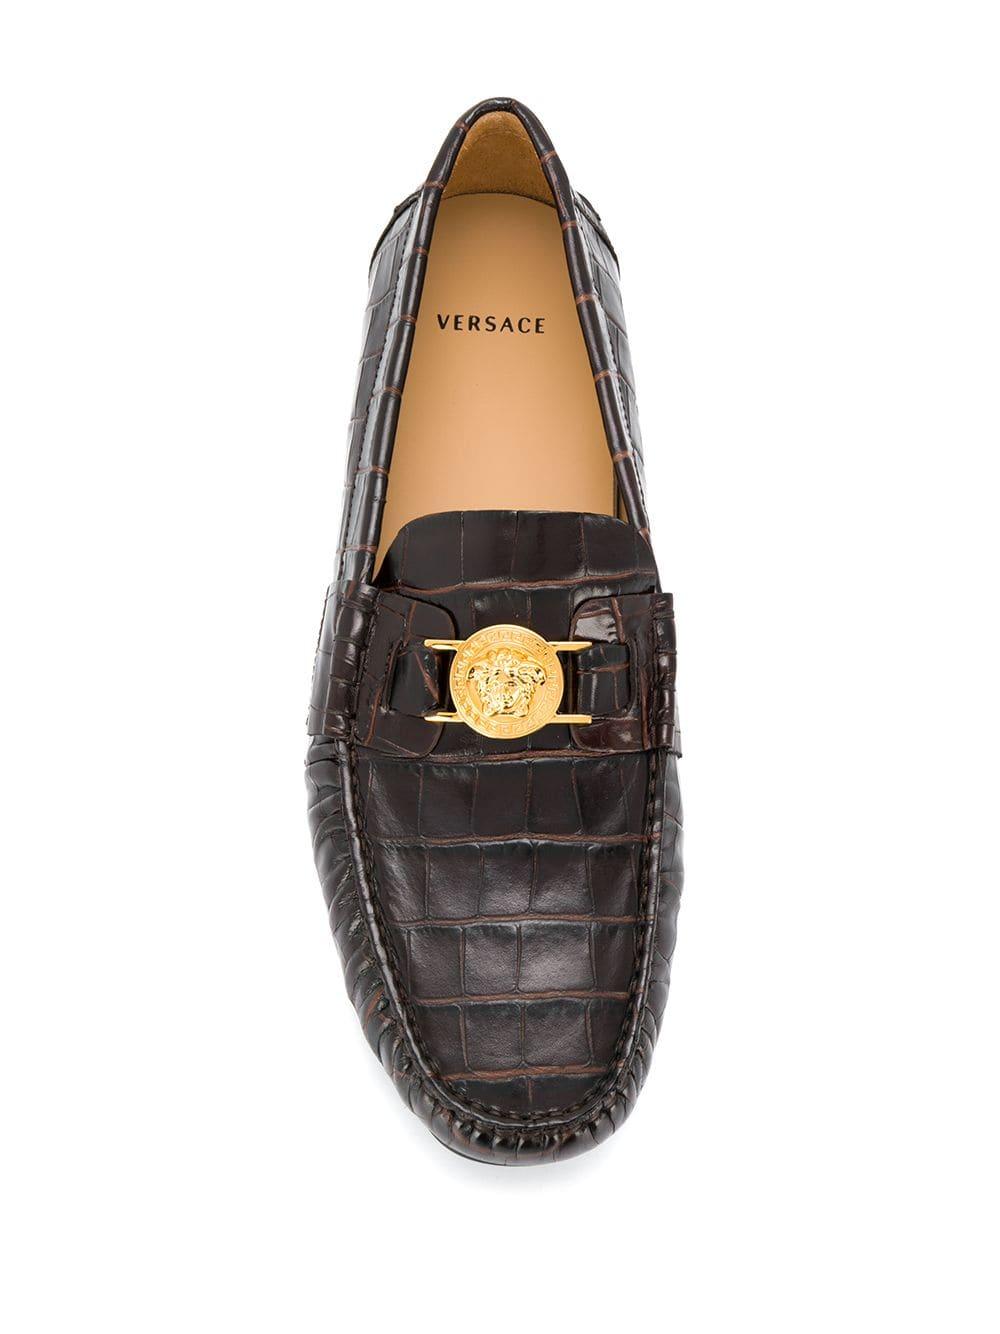 versace alligator shoes